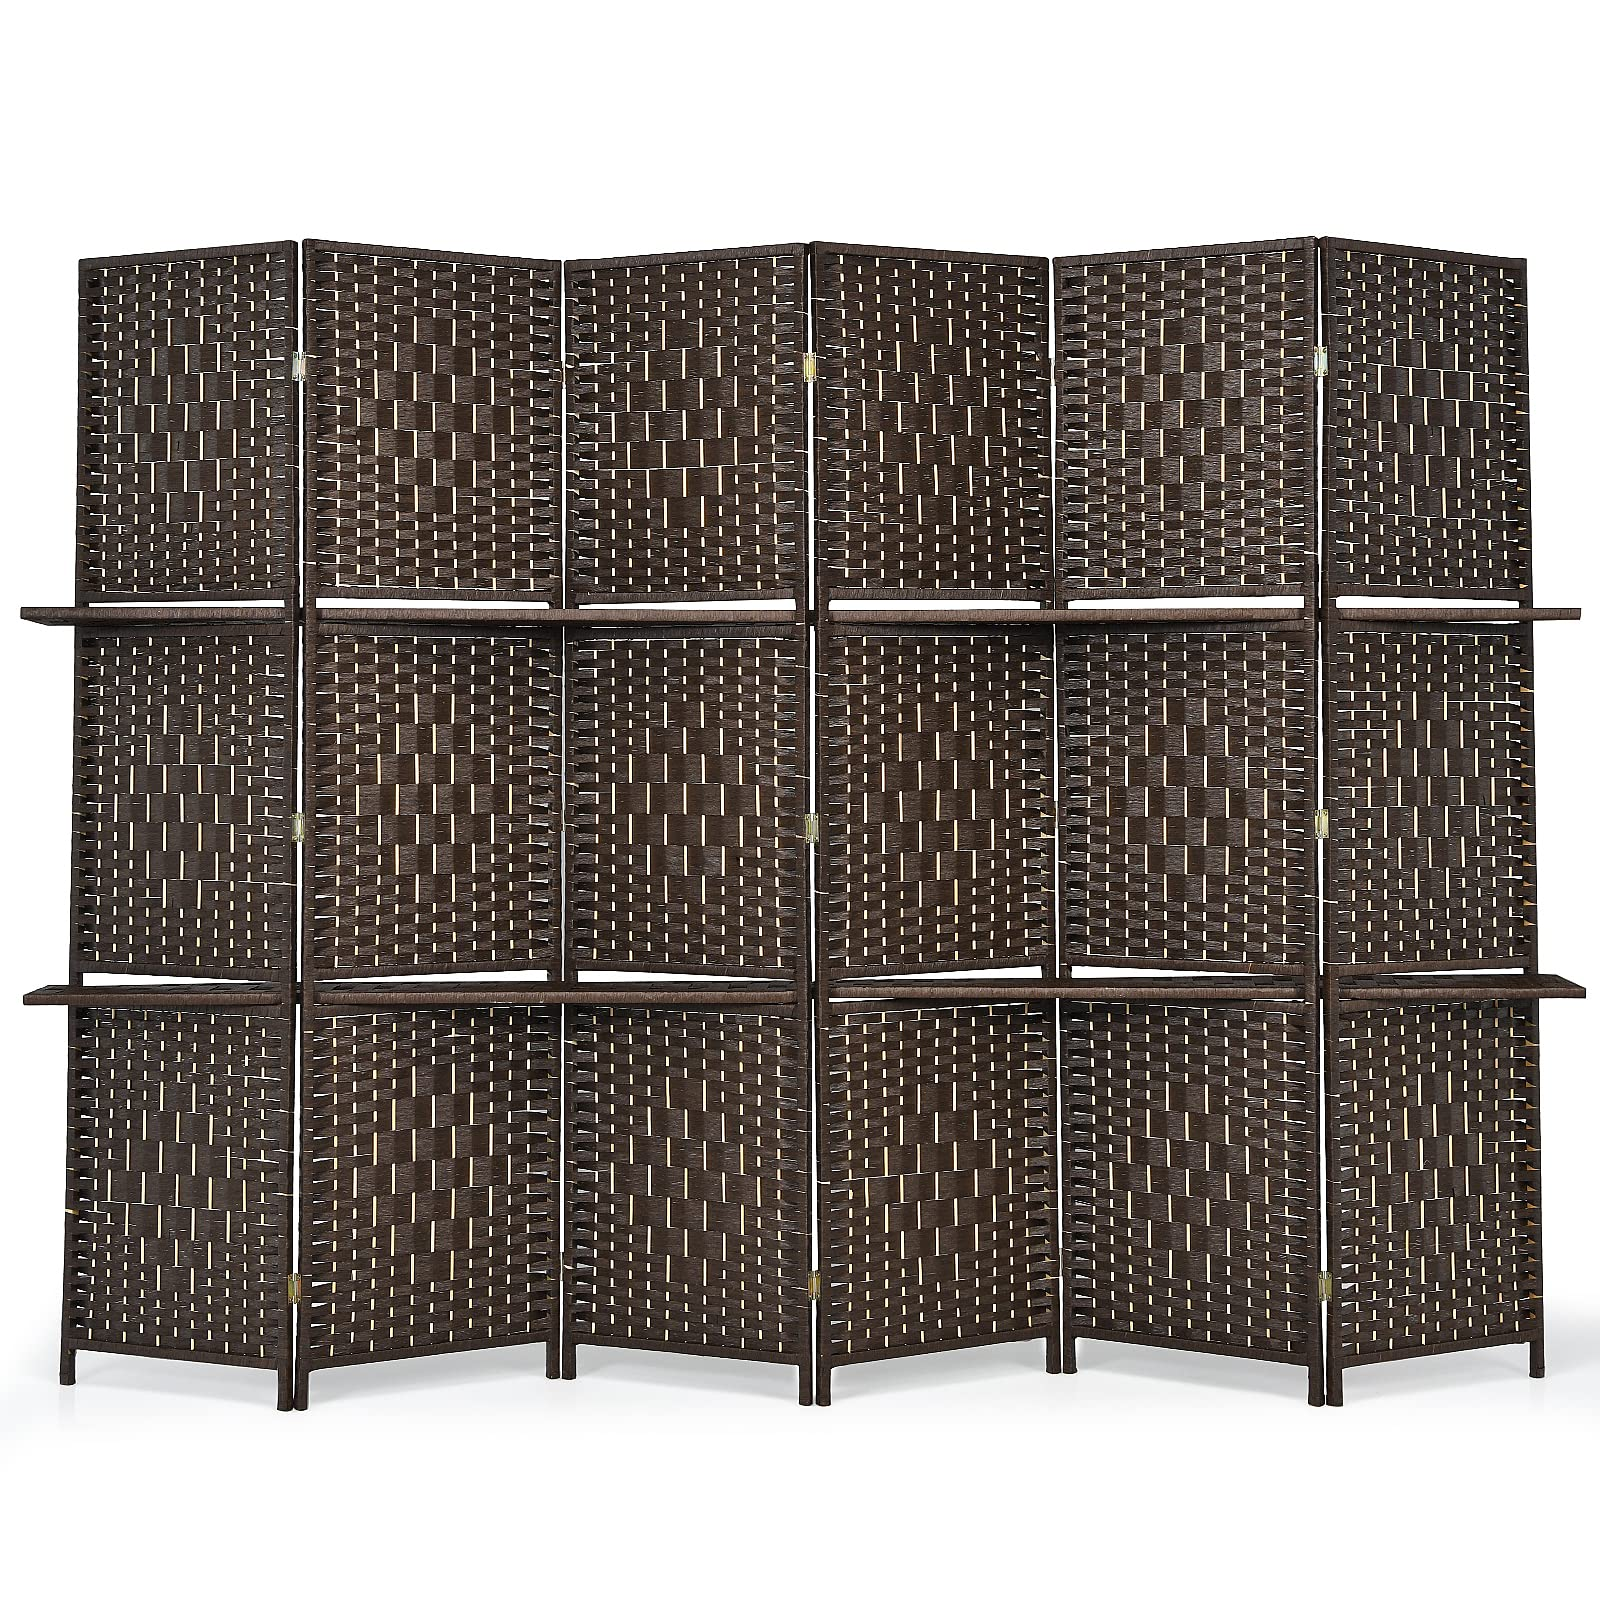 Giantex 6Ft 6 Panel Room Divider with Shelves